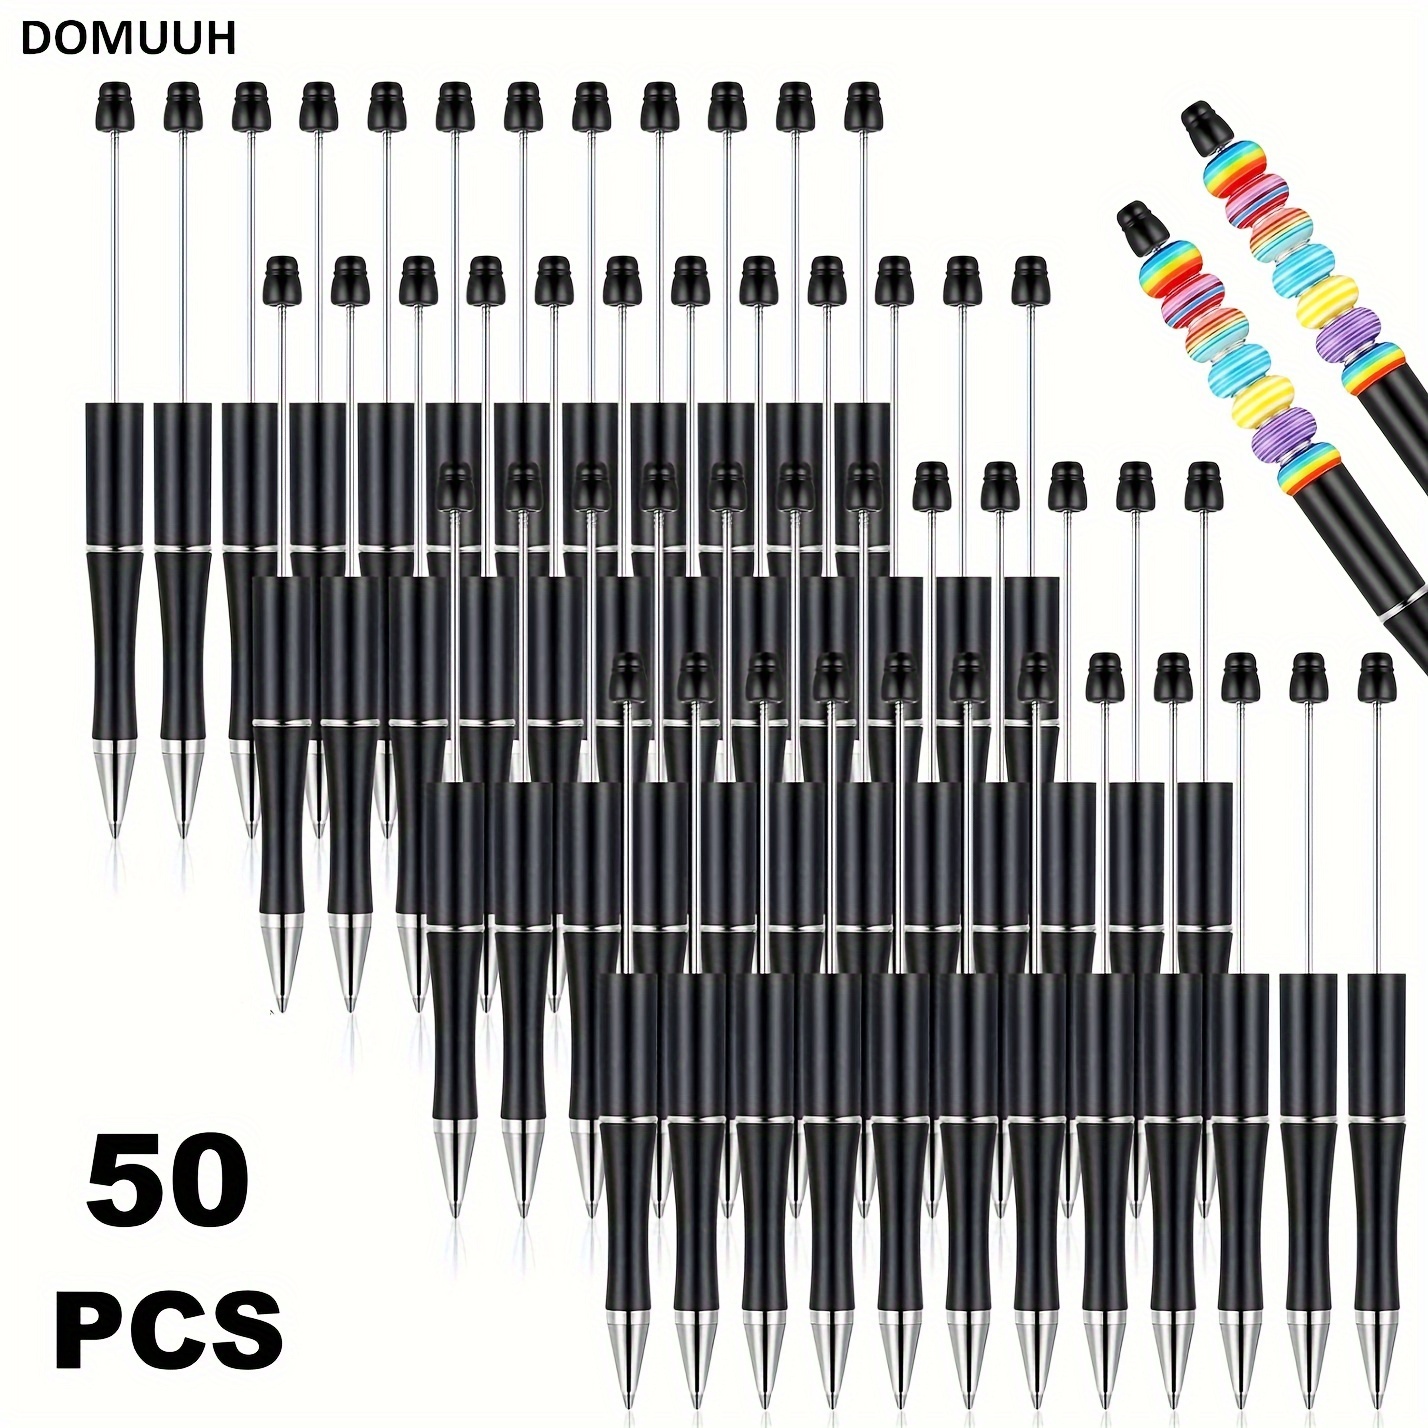 

50 Pieces Plastic Beadable Pen Bead Ballpoint Pen Assorted Bead Pen Shaft Black Ink Rollerball Pen With Extra Refills For Office School Supplies (black)